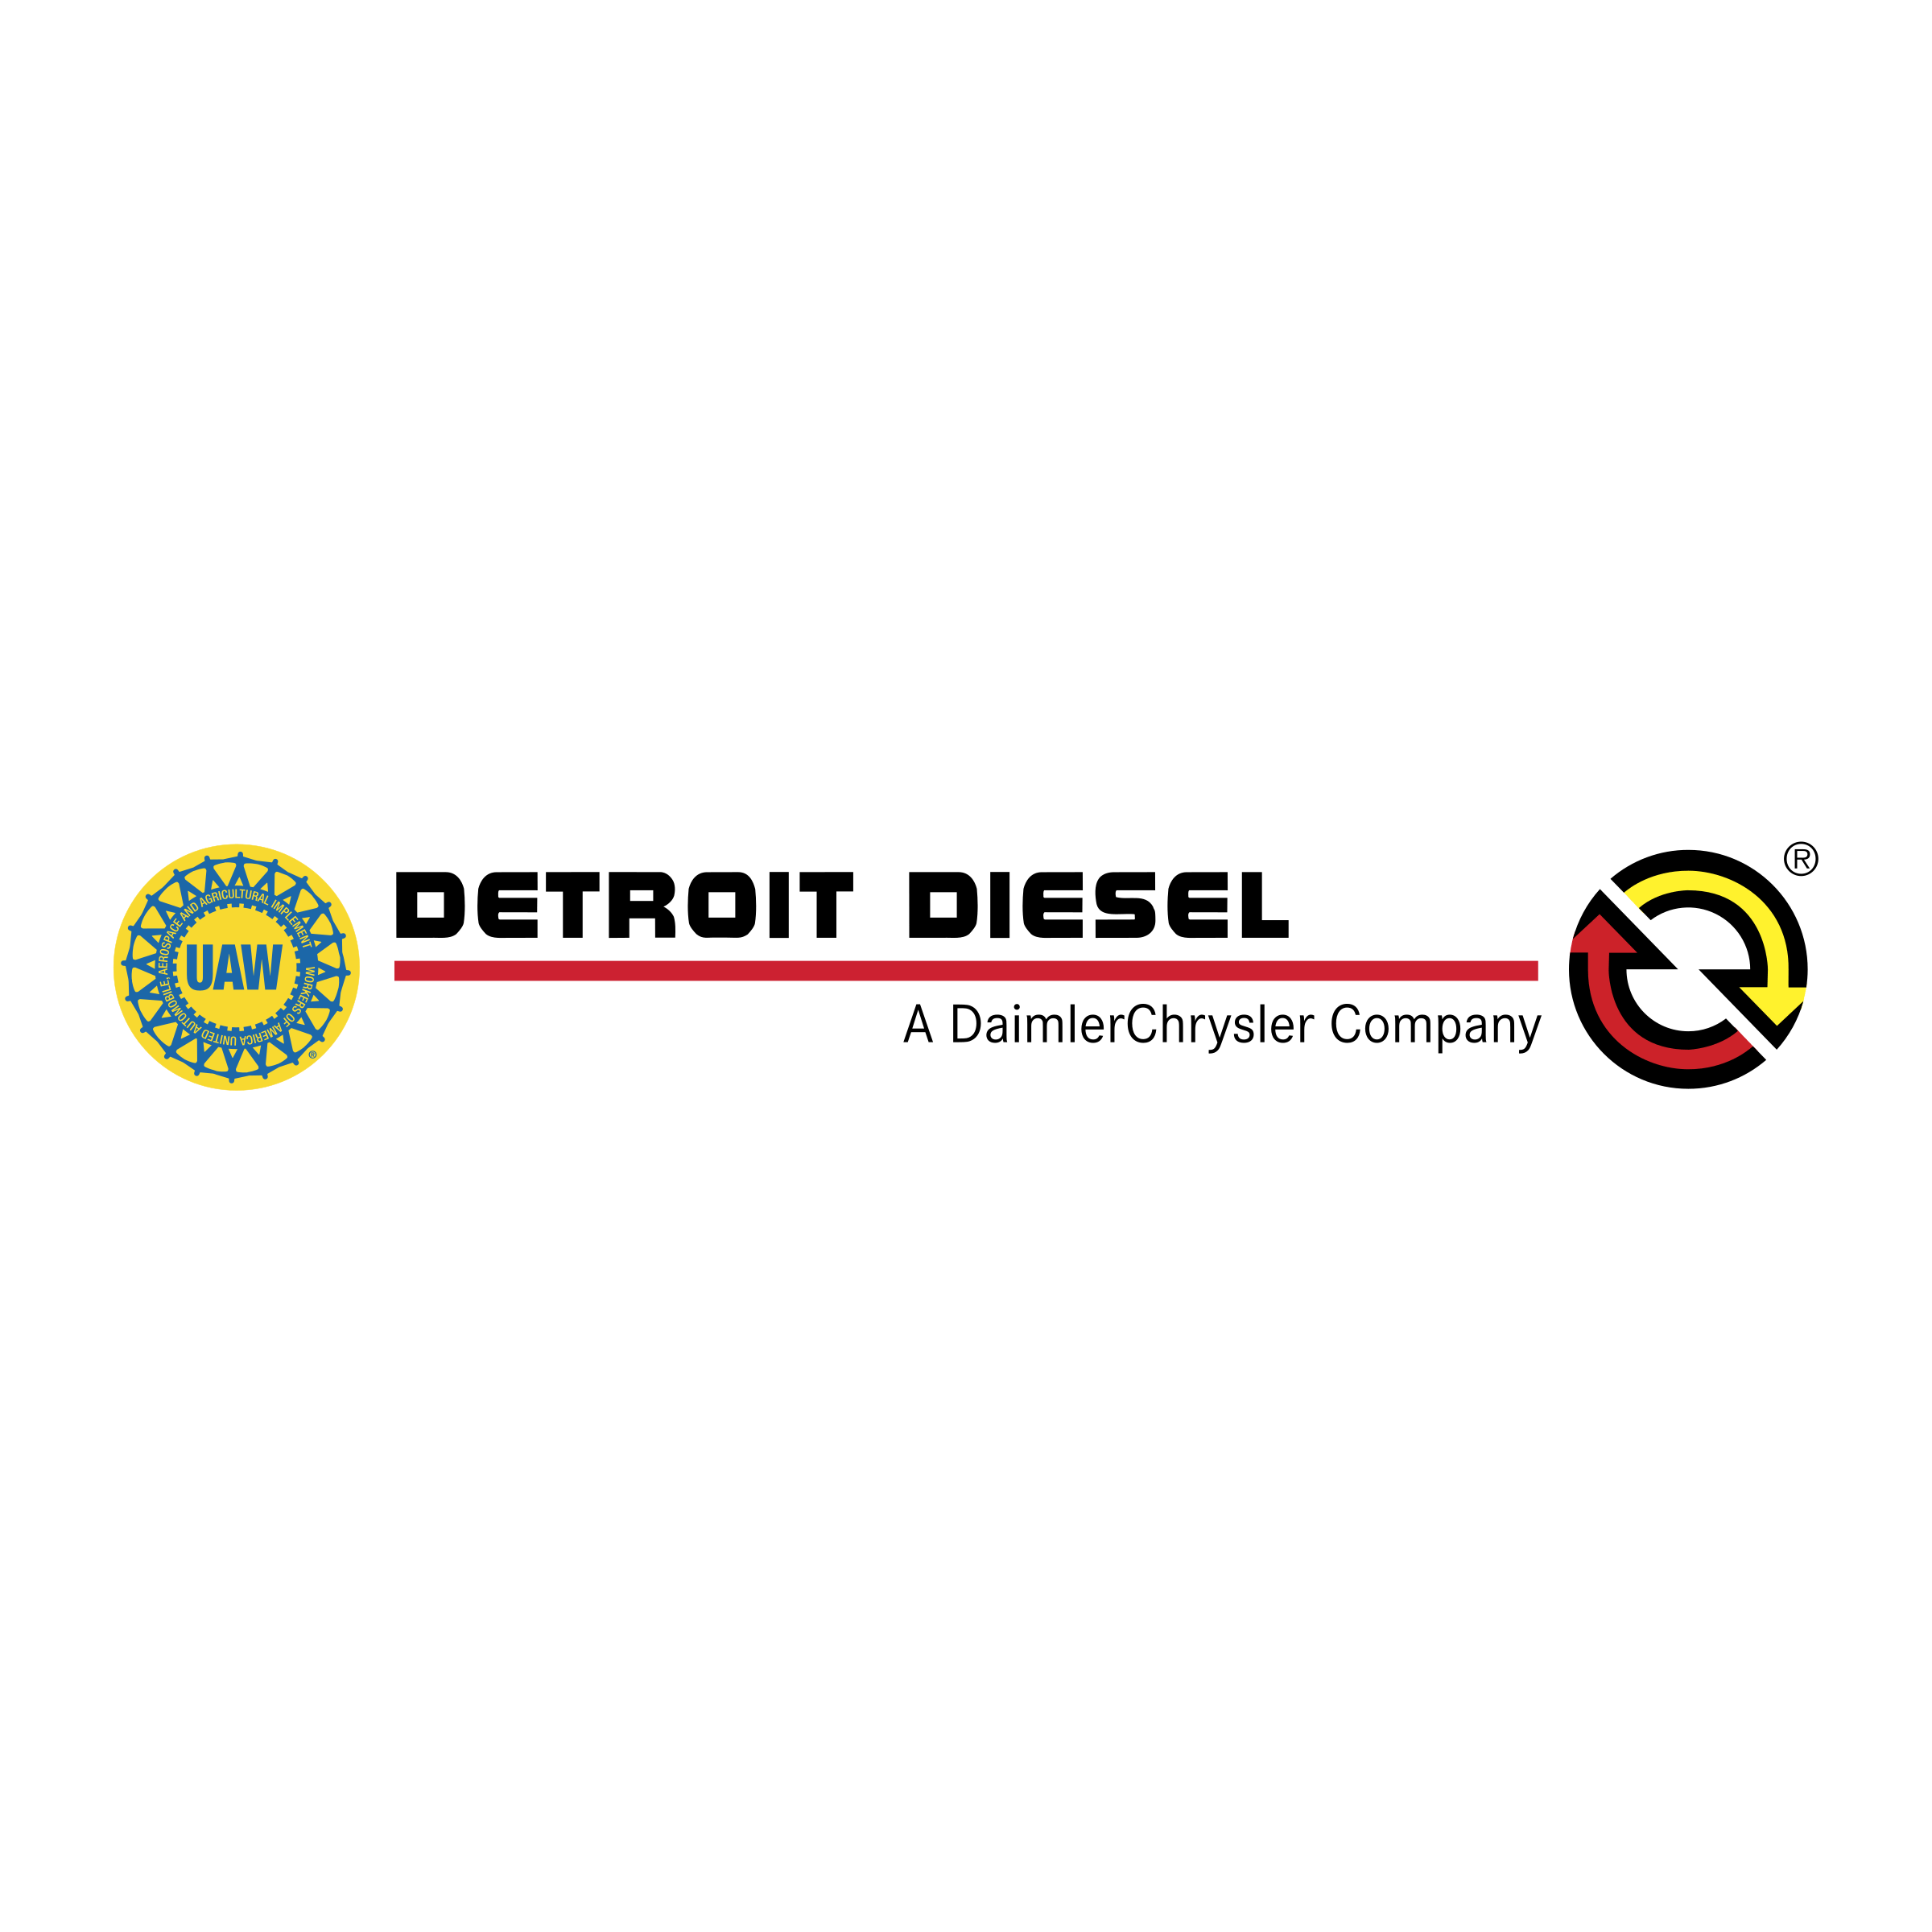 Detroit Diesel Logo - Detroit Diesel Logo PNG Transparent & SVG Vector - Freebie Supply